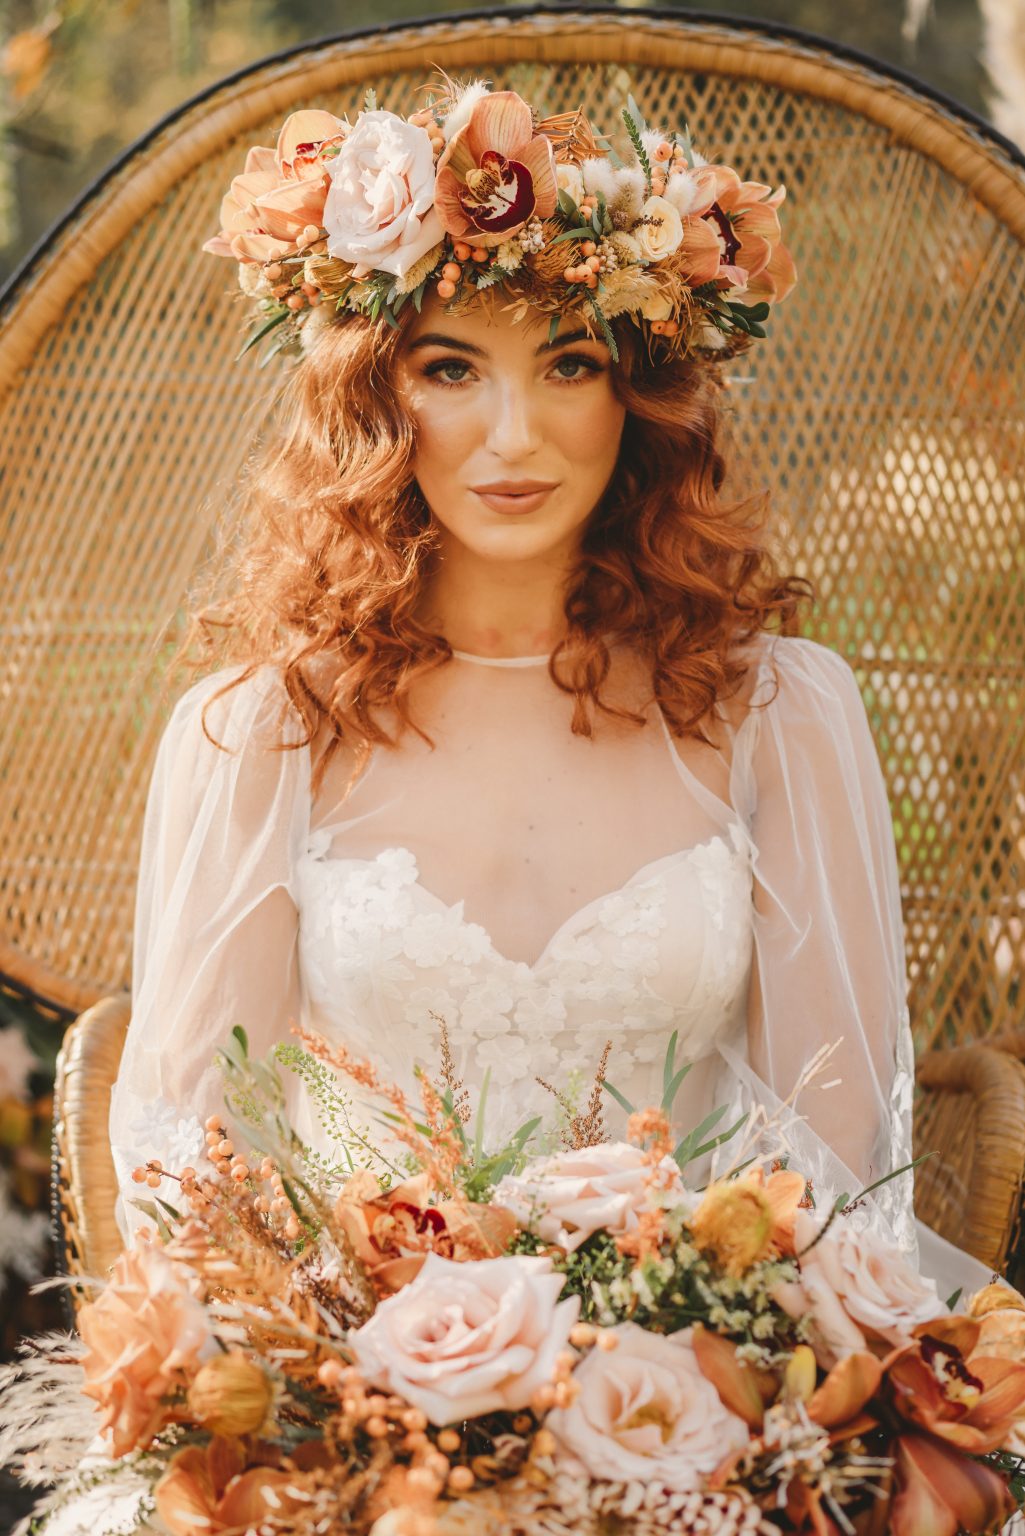 Magical Outdoor Autumn Wedding Inspiration With British Made Wedding